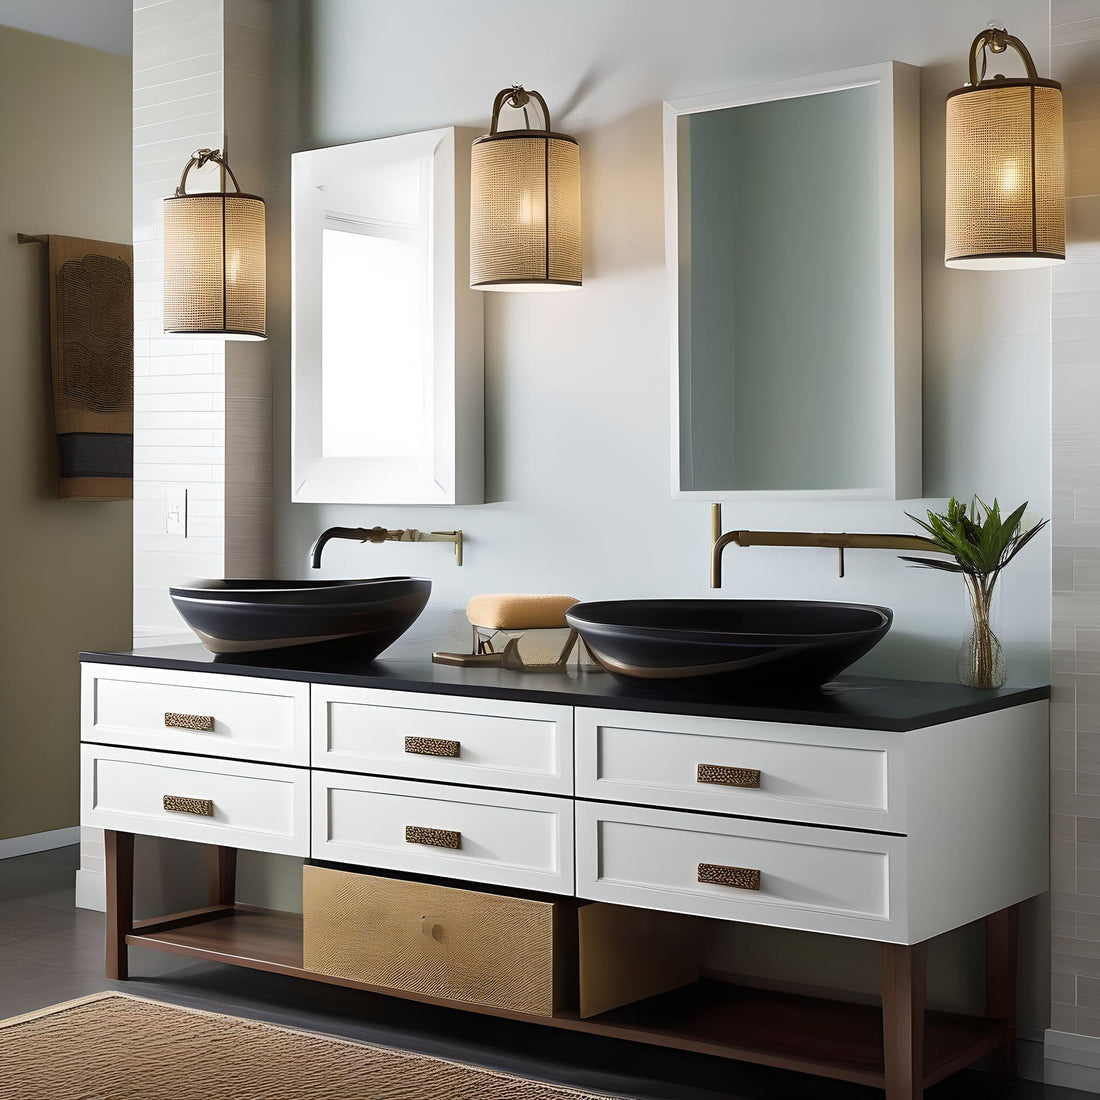 10 Stunning Bathroom Vanity Designs to Elevate Your Space